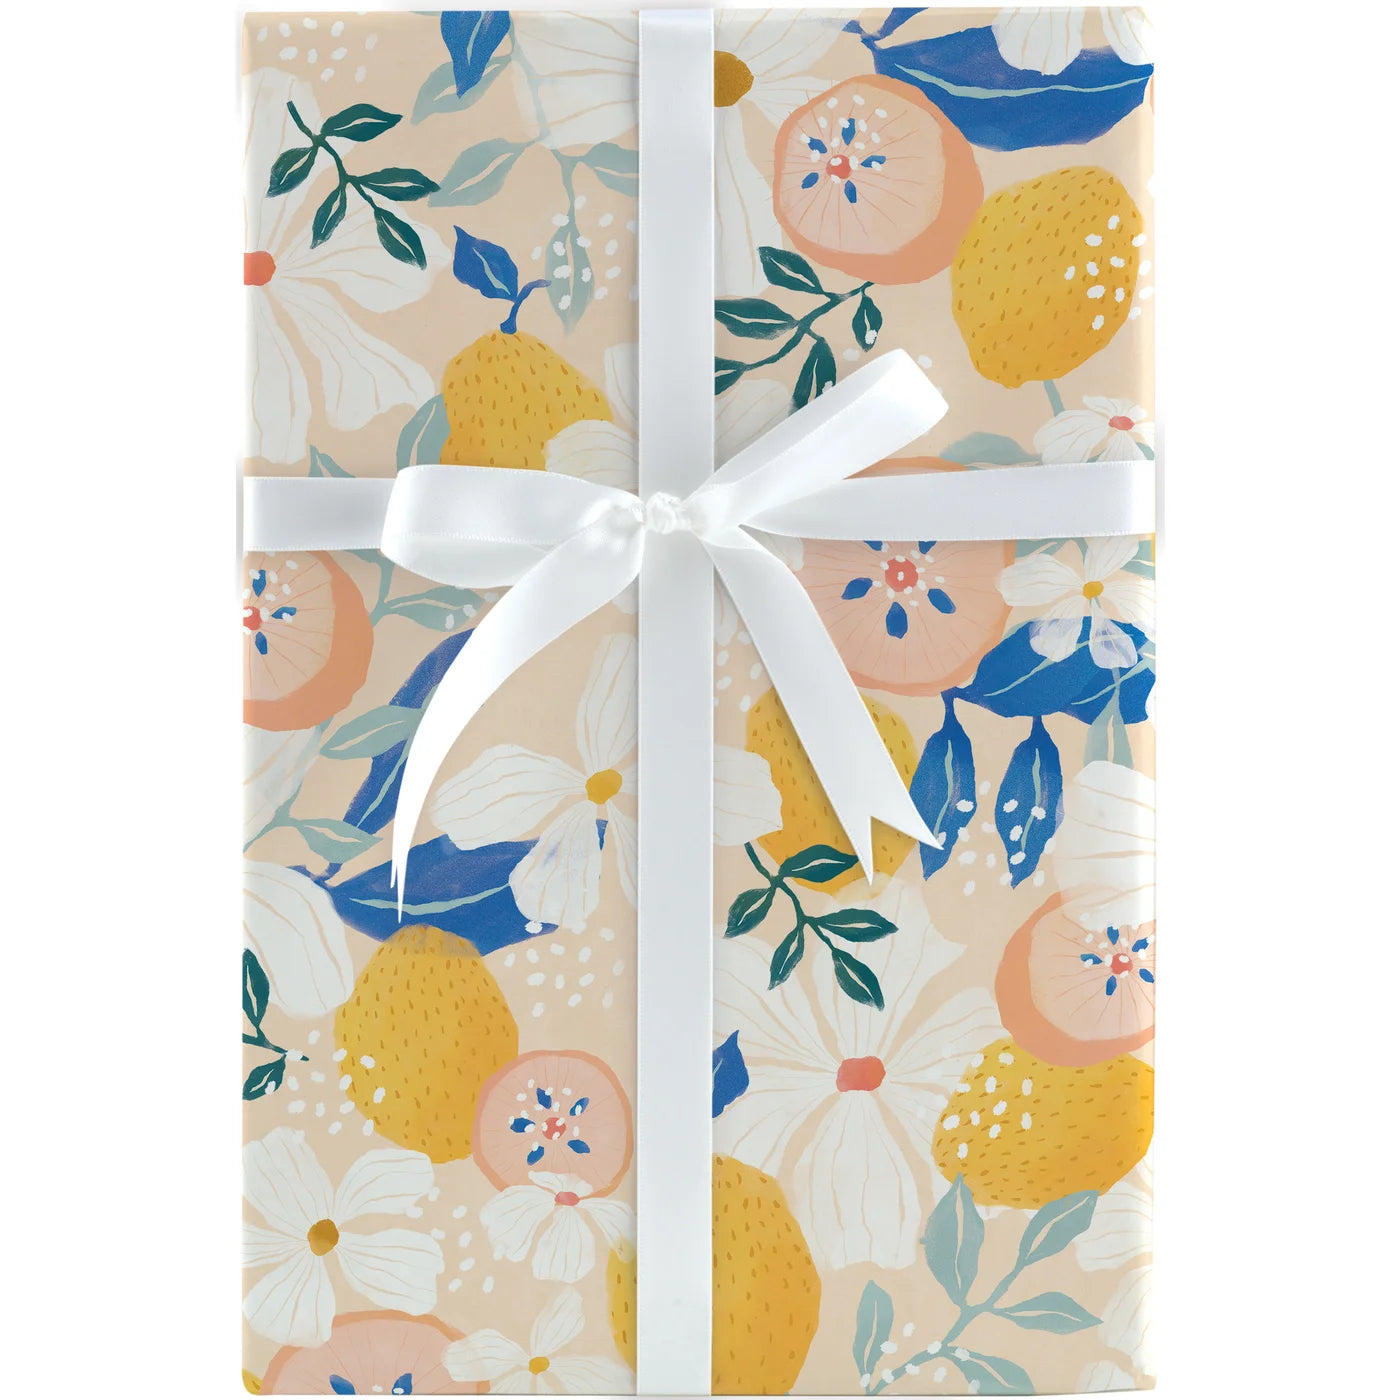 Jumbo Roll Wrap - Citrus Floral